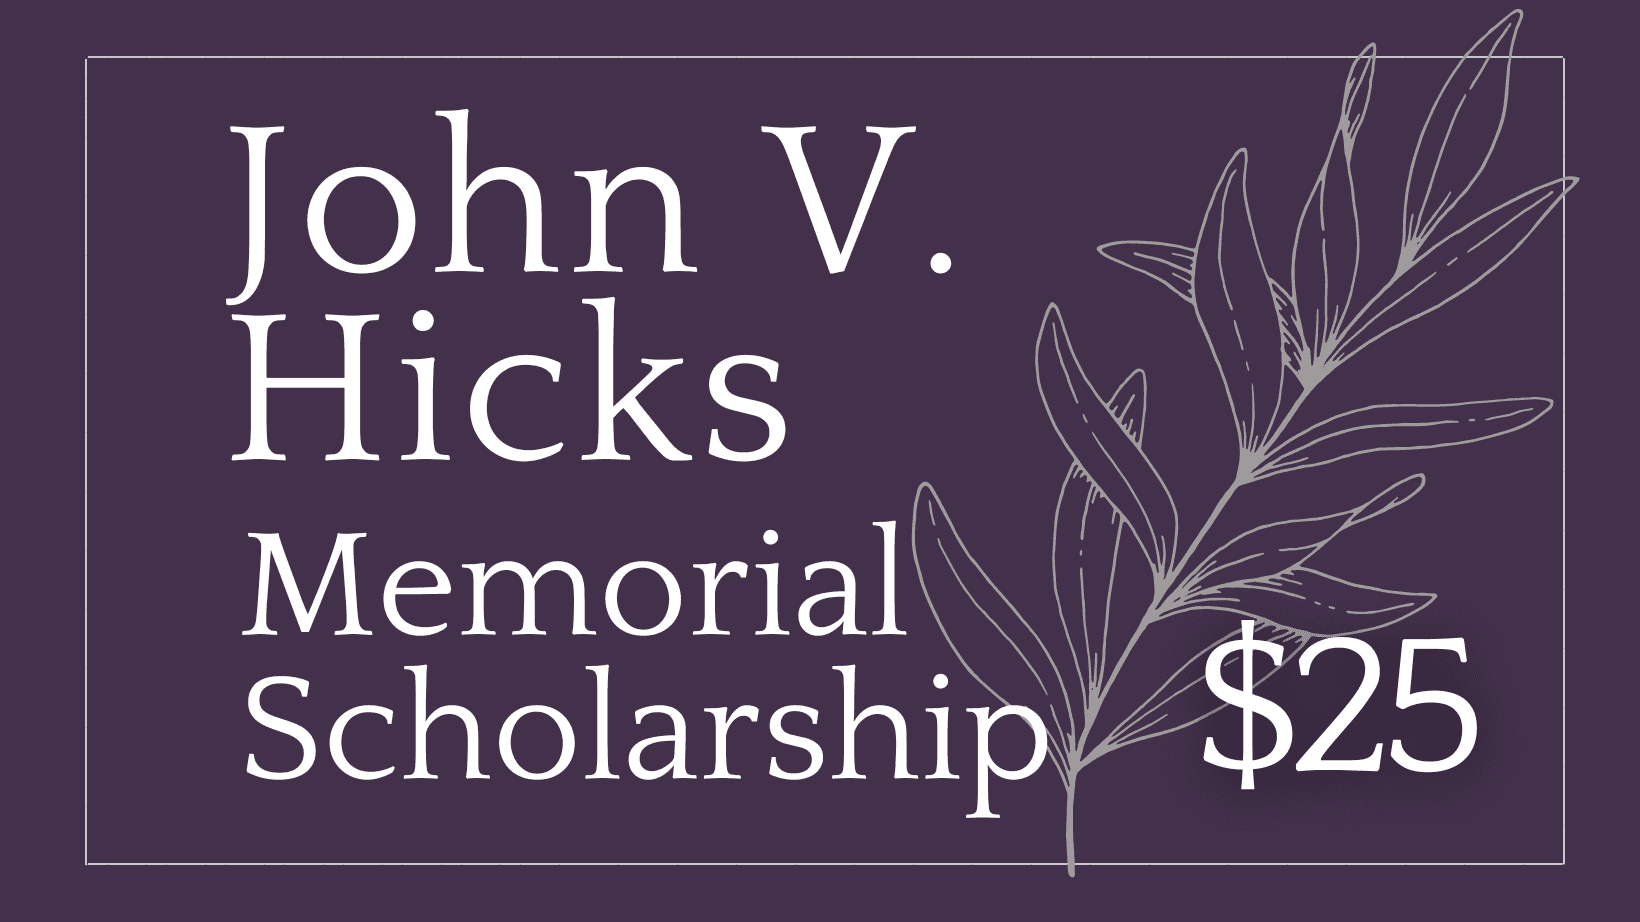 John V. Hicks Scholarship supporting image.